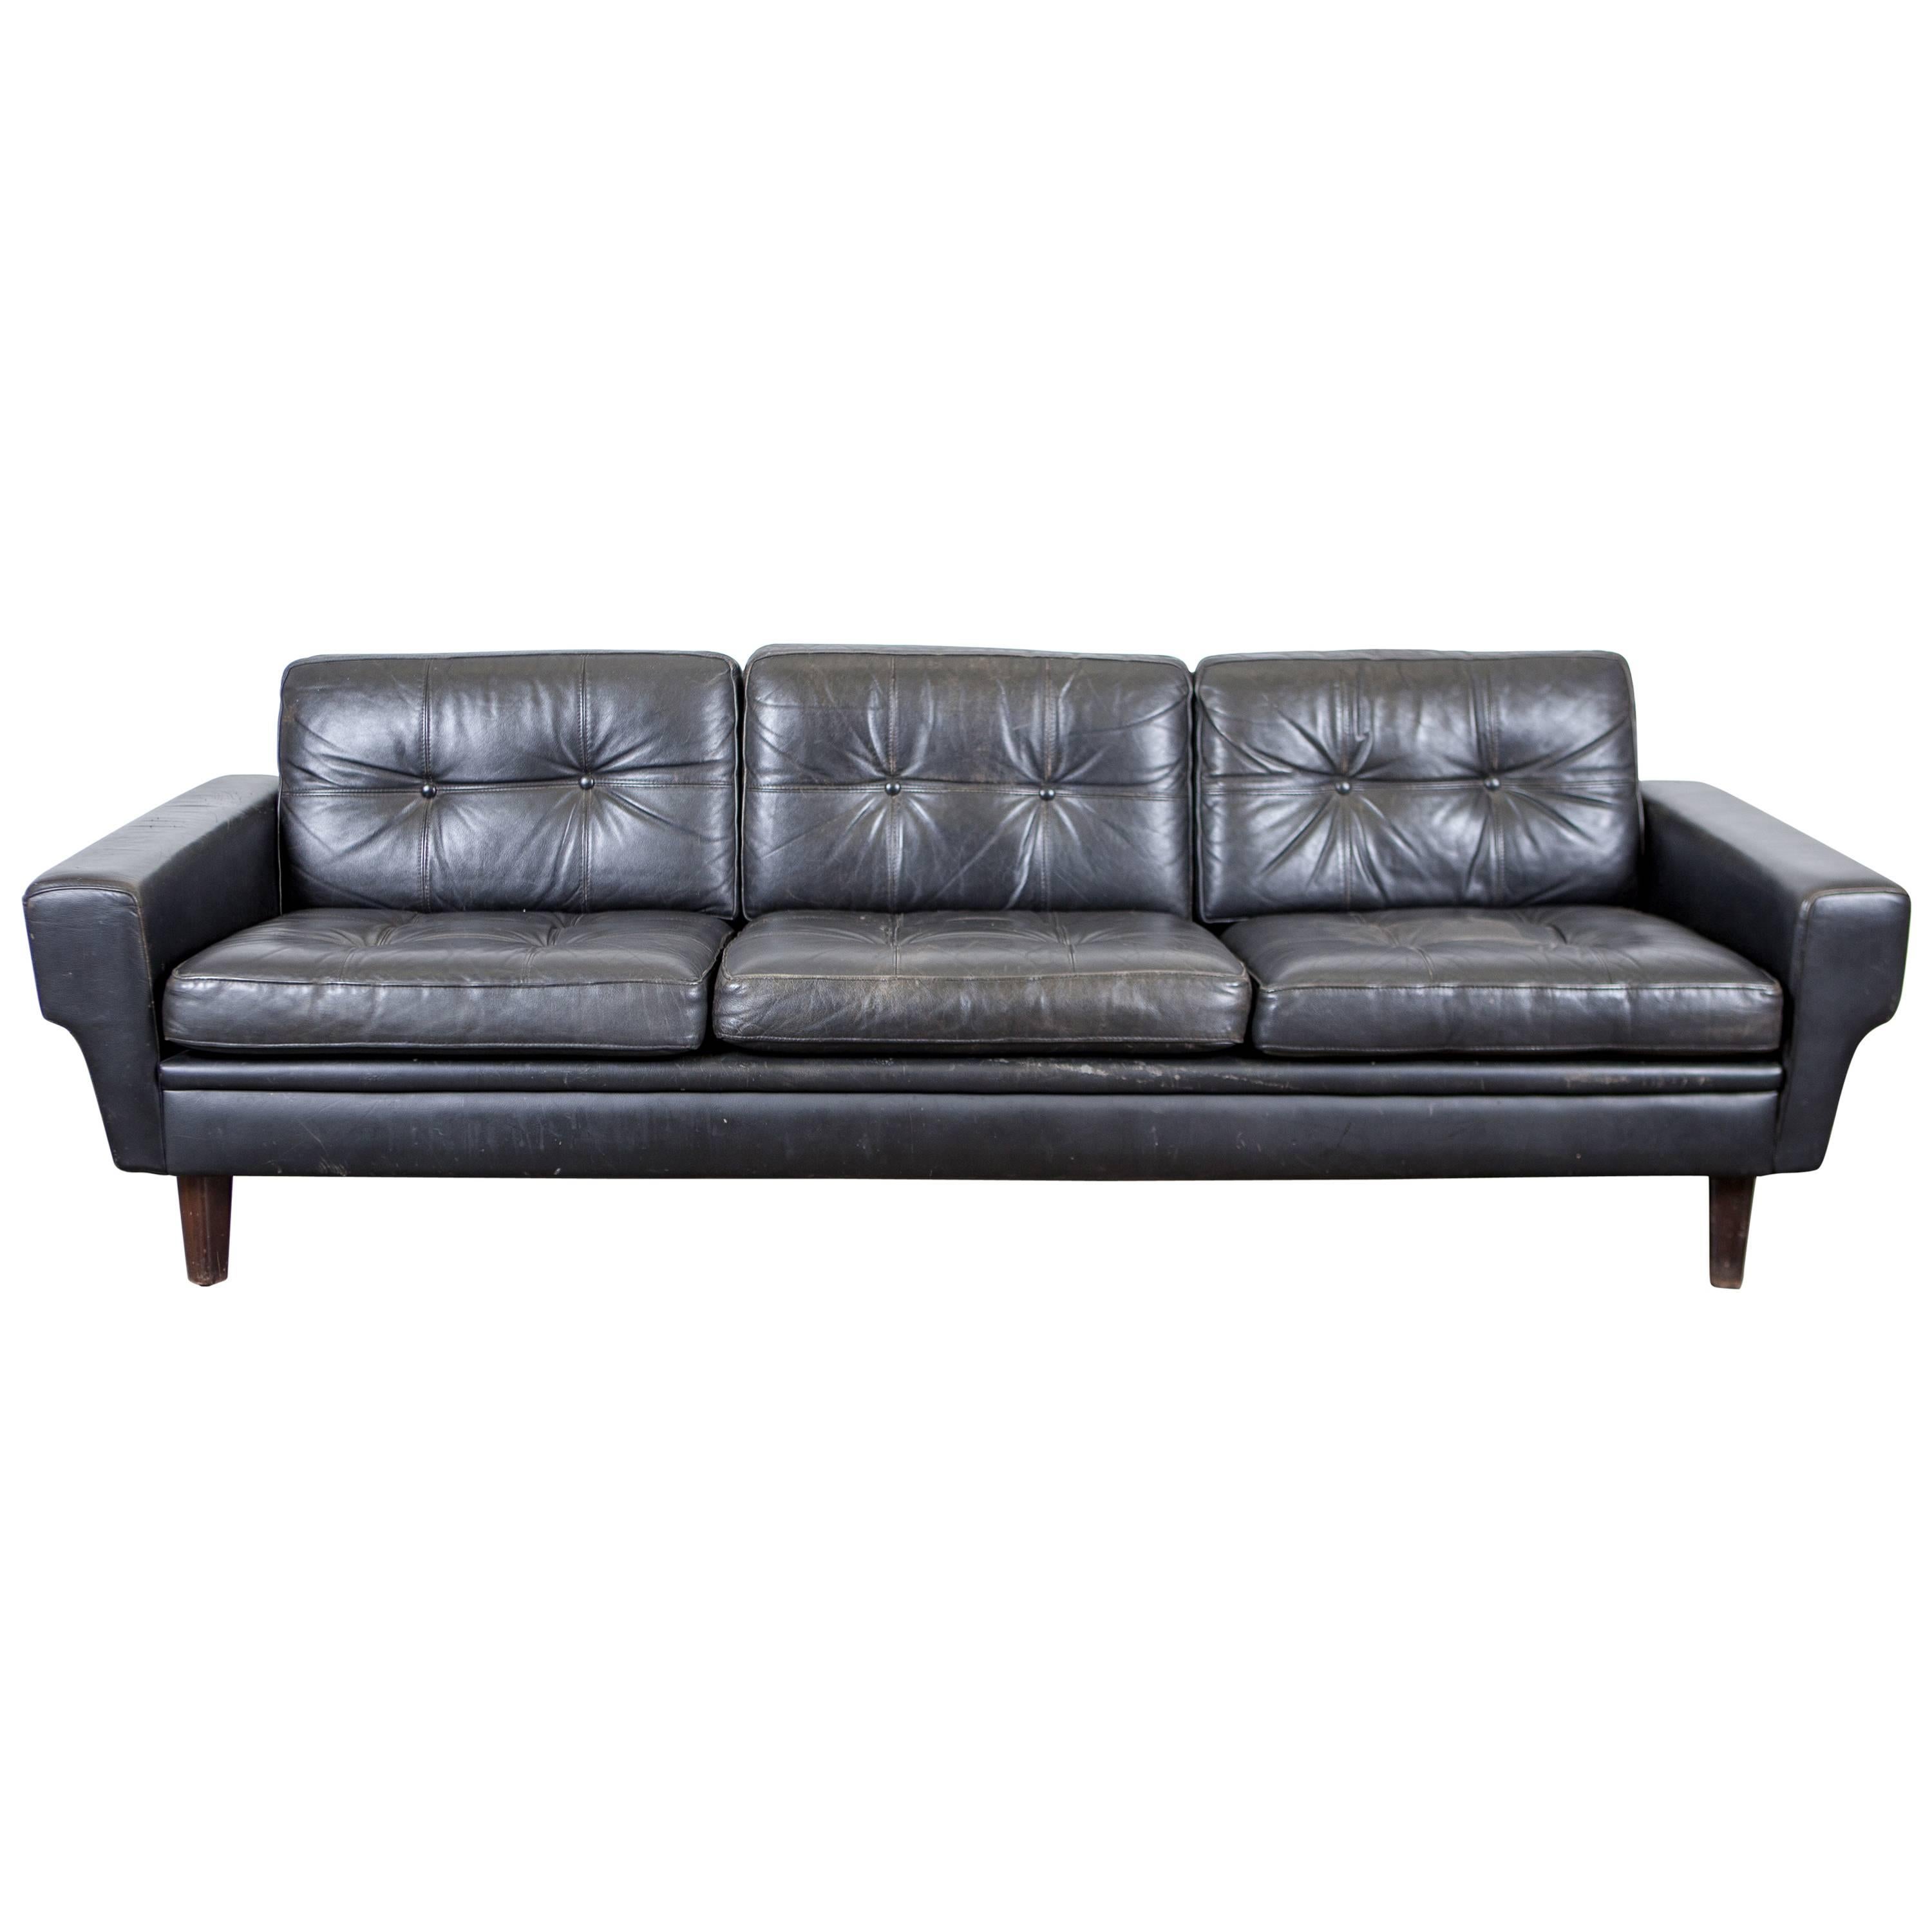 Danish Mid-Century Black Leather Sofa